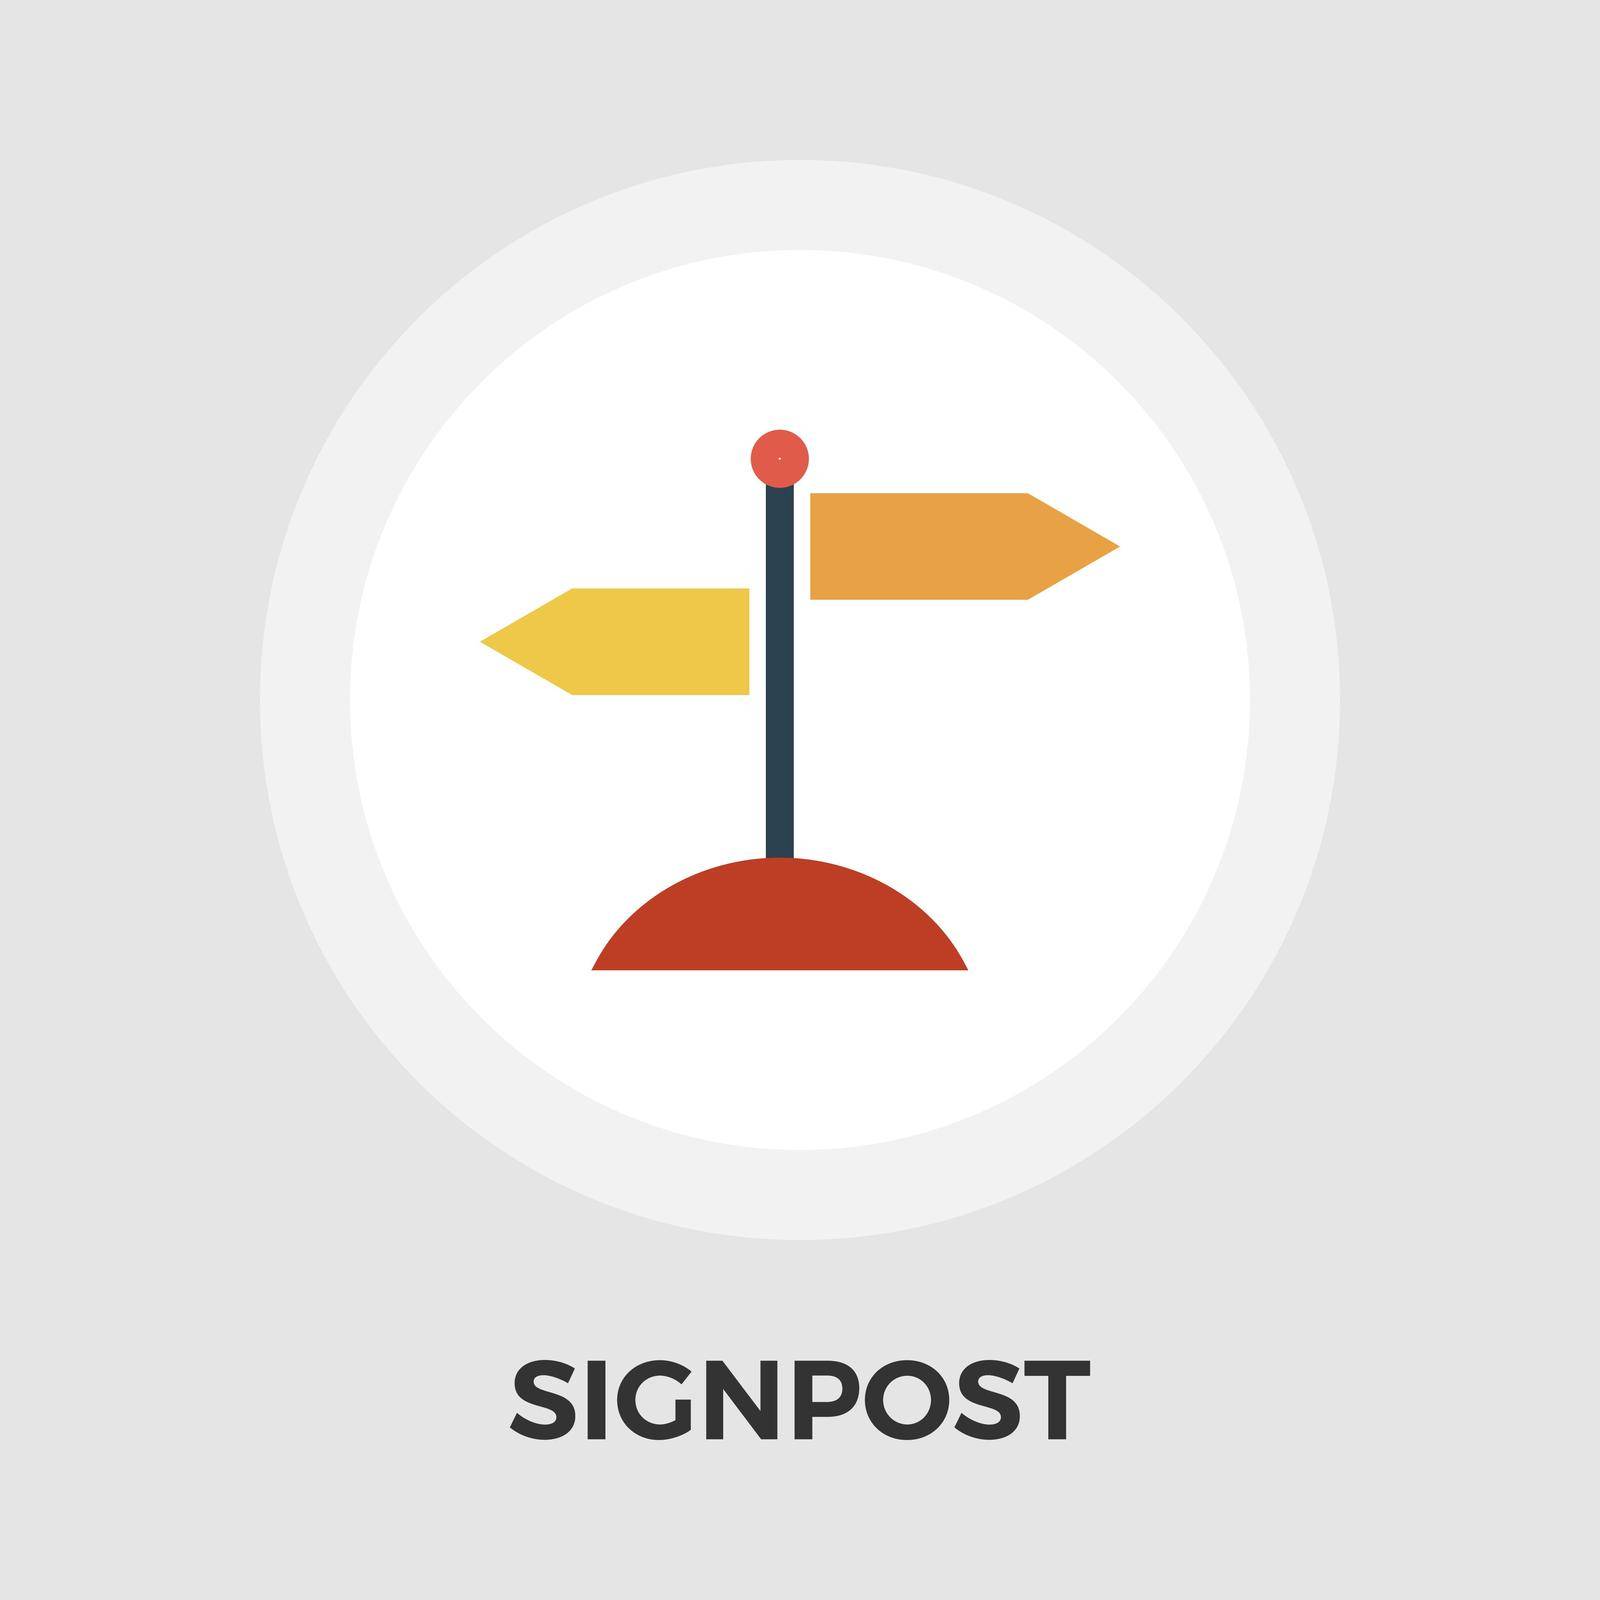 Signpost vector flat icon by smoki